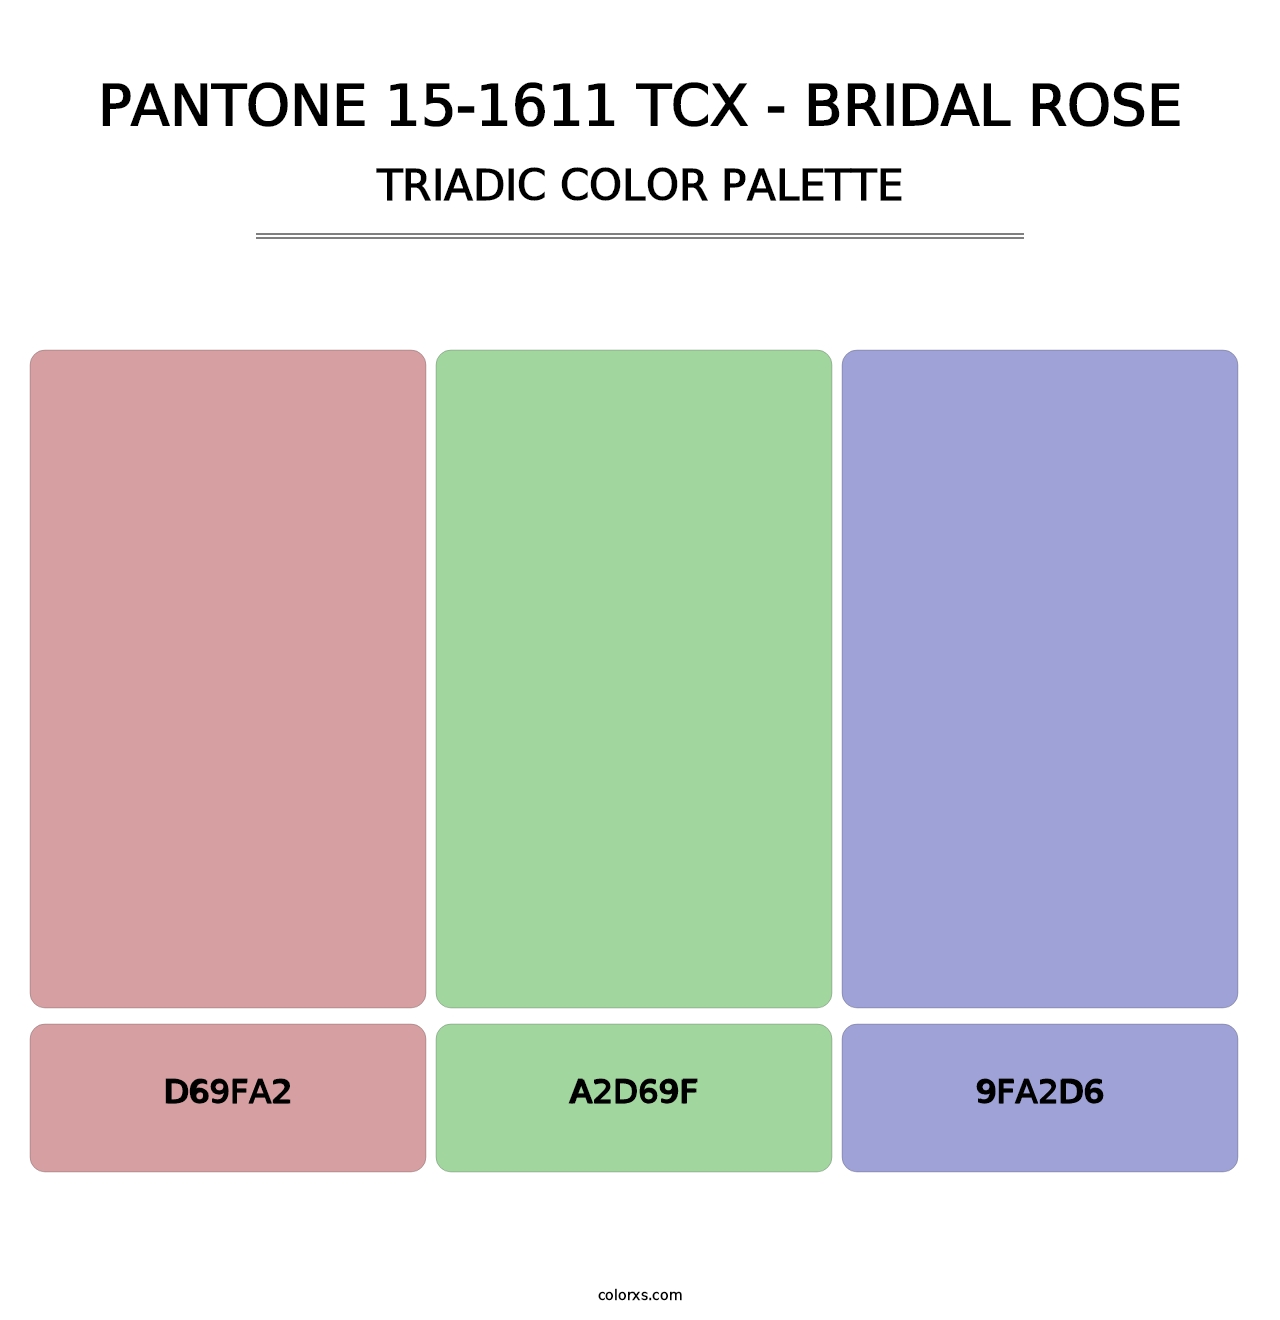 PANTONE 15-1611 TCX - Bridal Rose - Triadic Color Palette